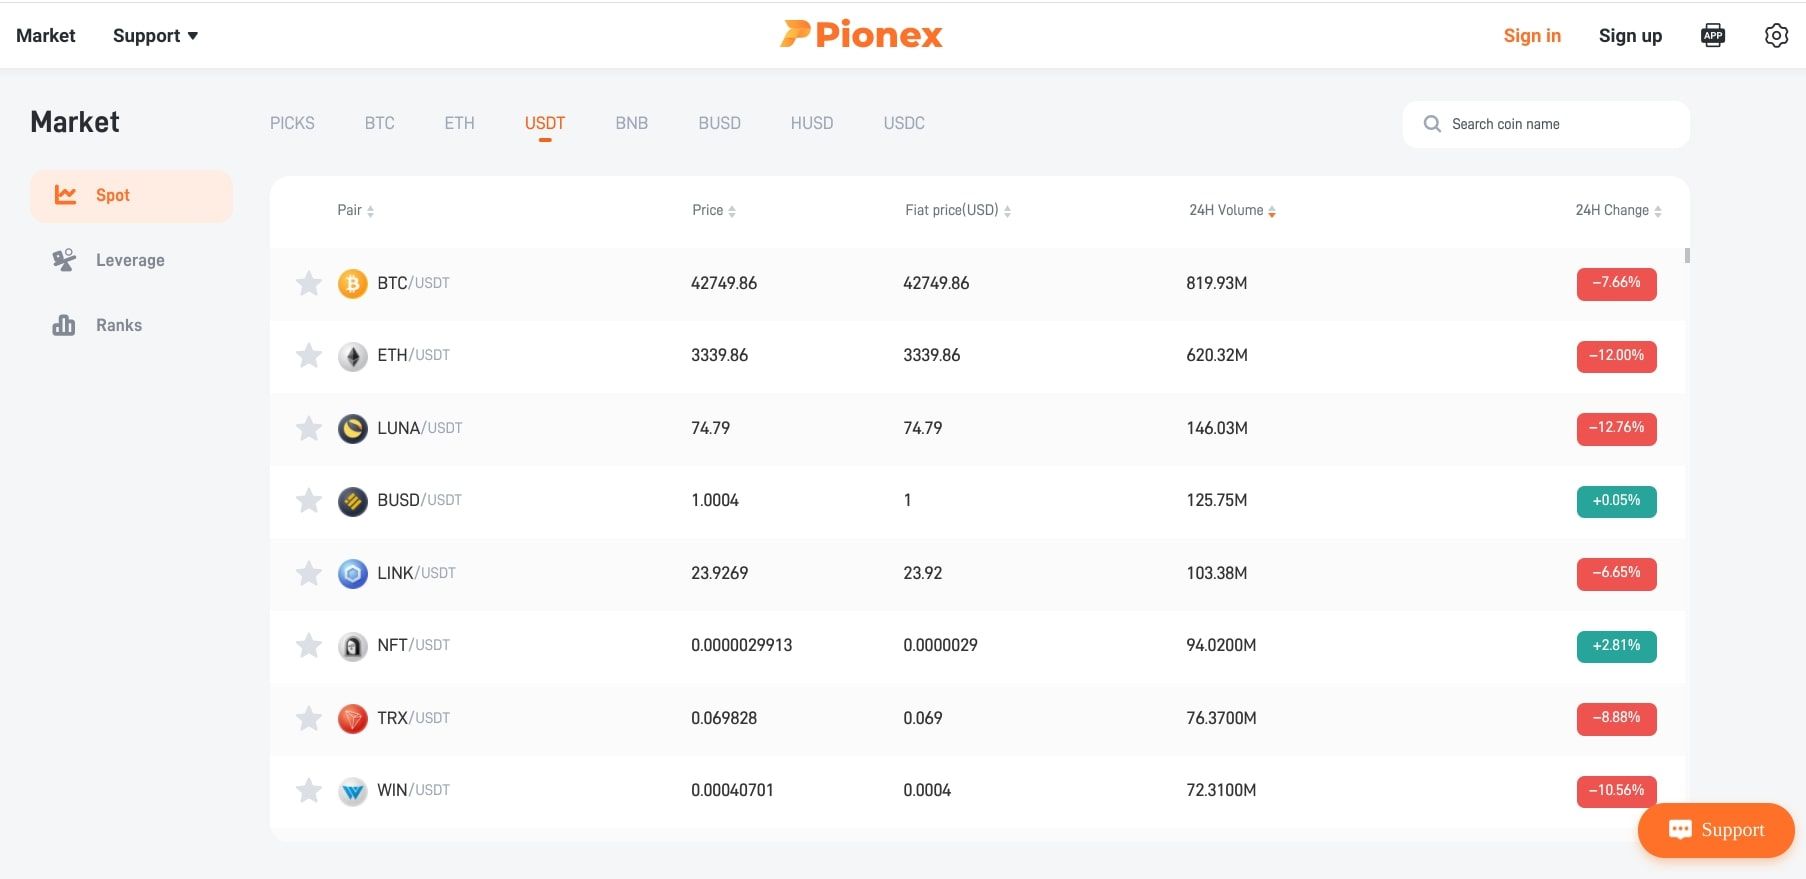 pionex market webpage screenshot